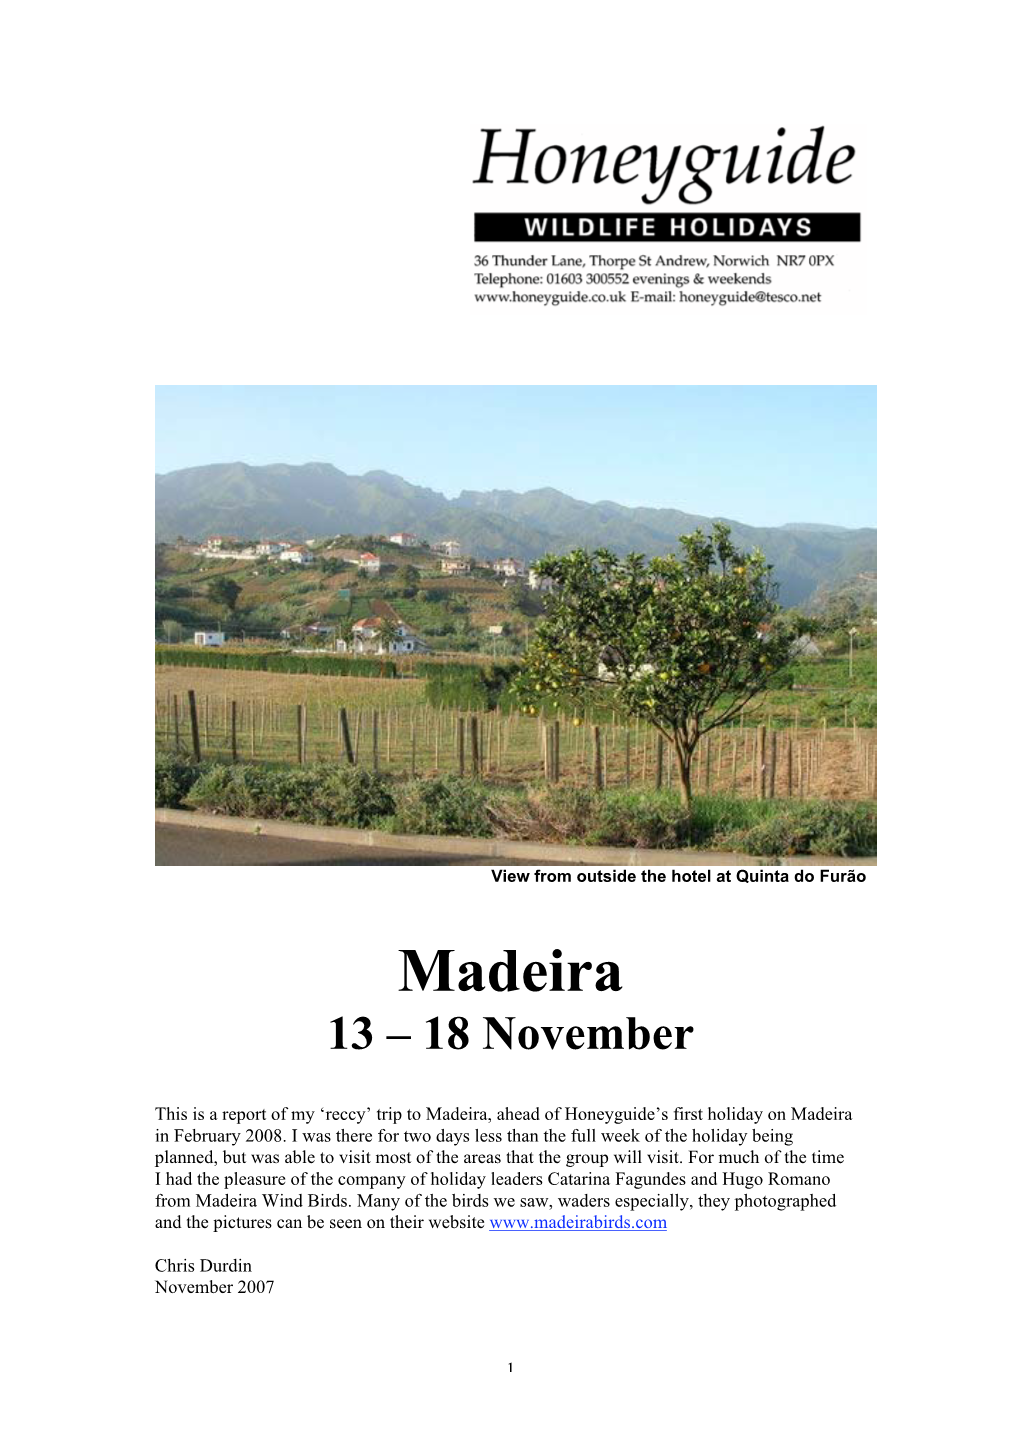 Madeira 13 – 18 November